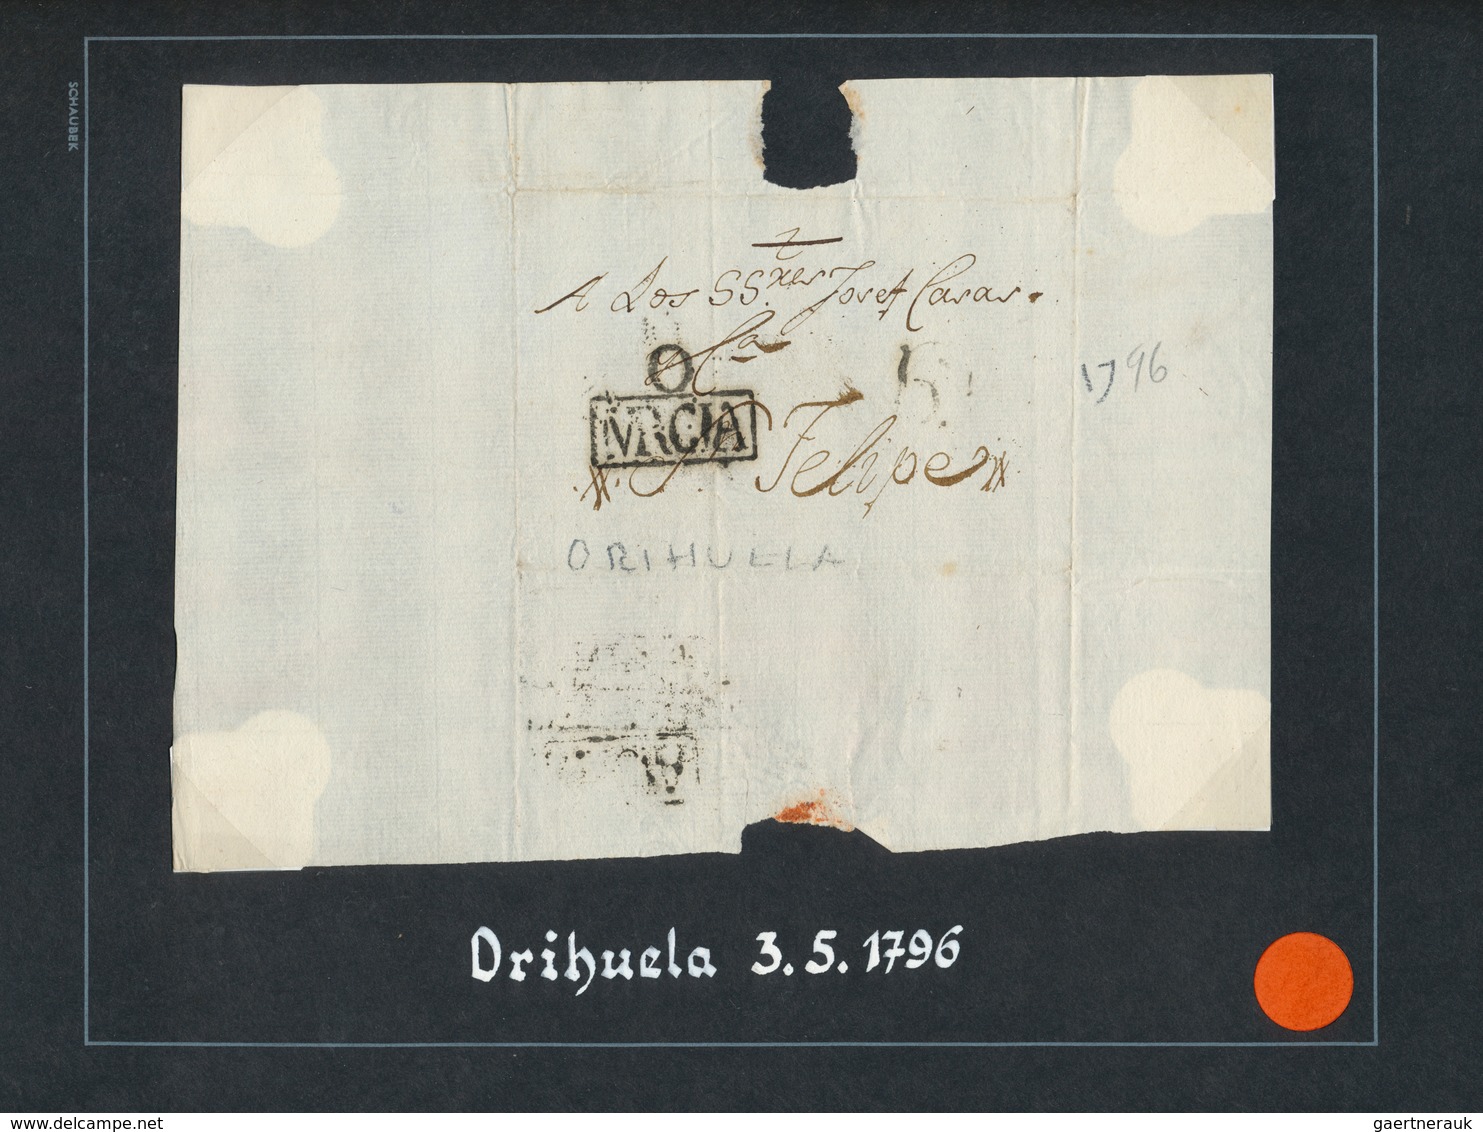 29867 Spanien - Vorphilatelie: 1789/1848 ca., comprehensive collection with ca.75 entire letters on album